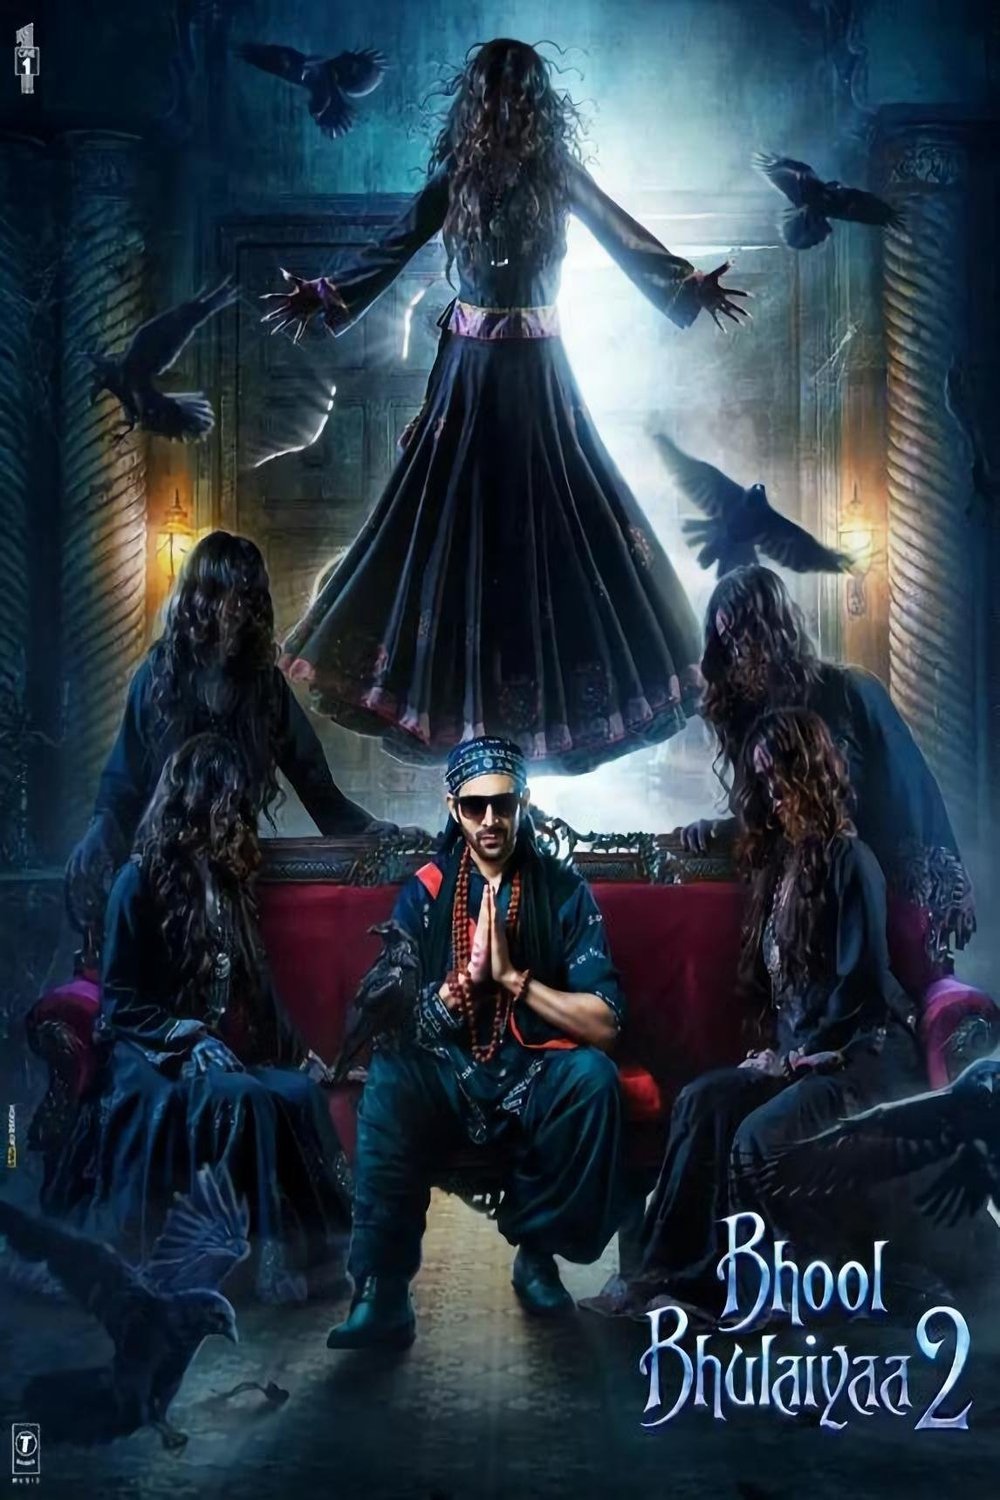 Hindi poster of the movie Bhool Bhulaiyaa 2